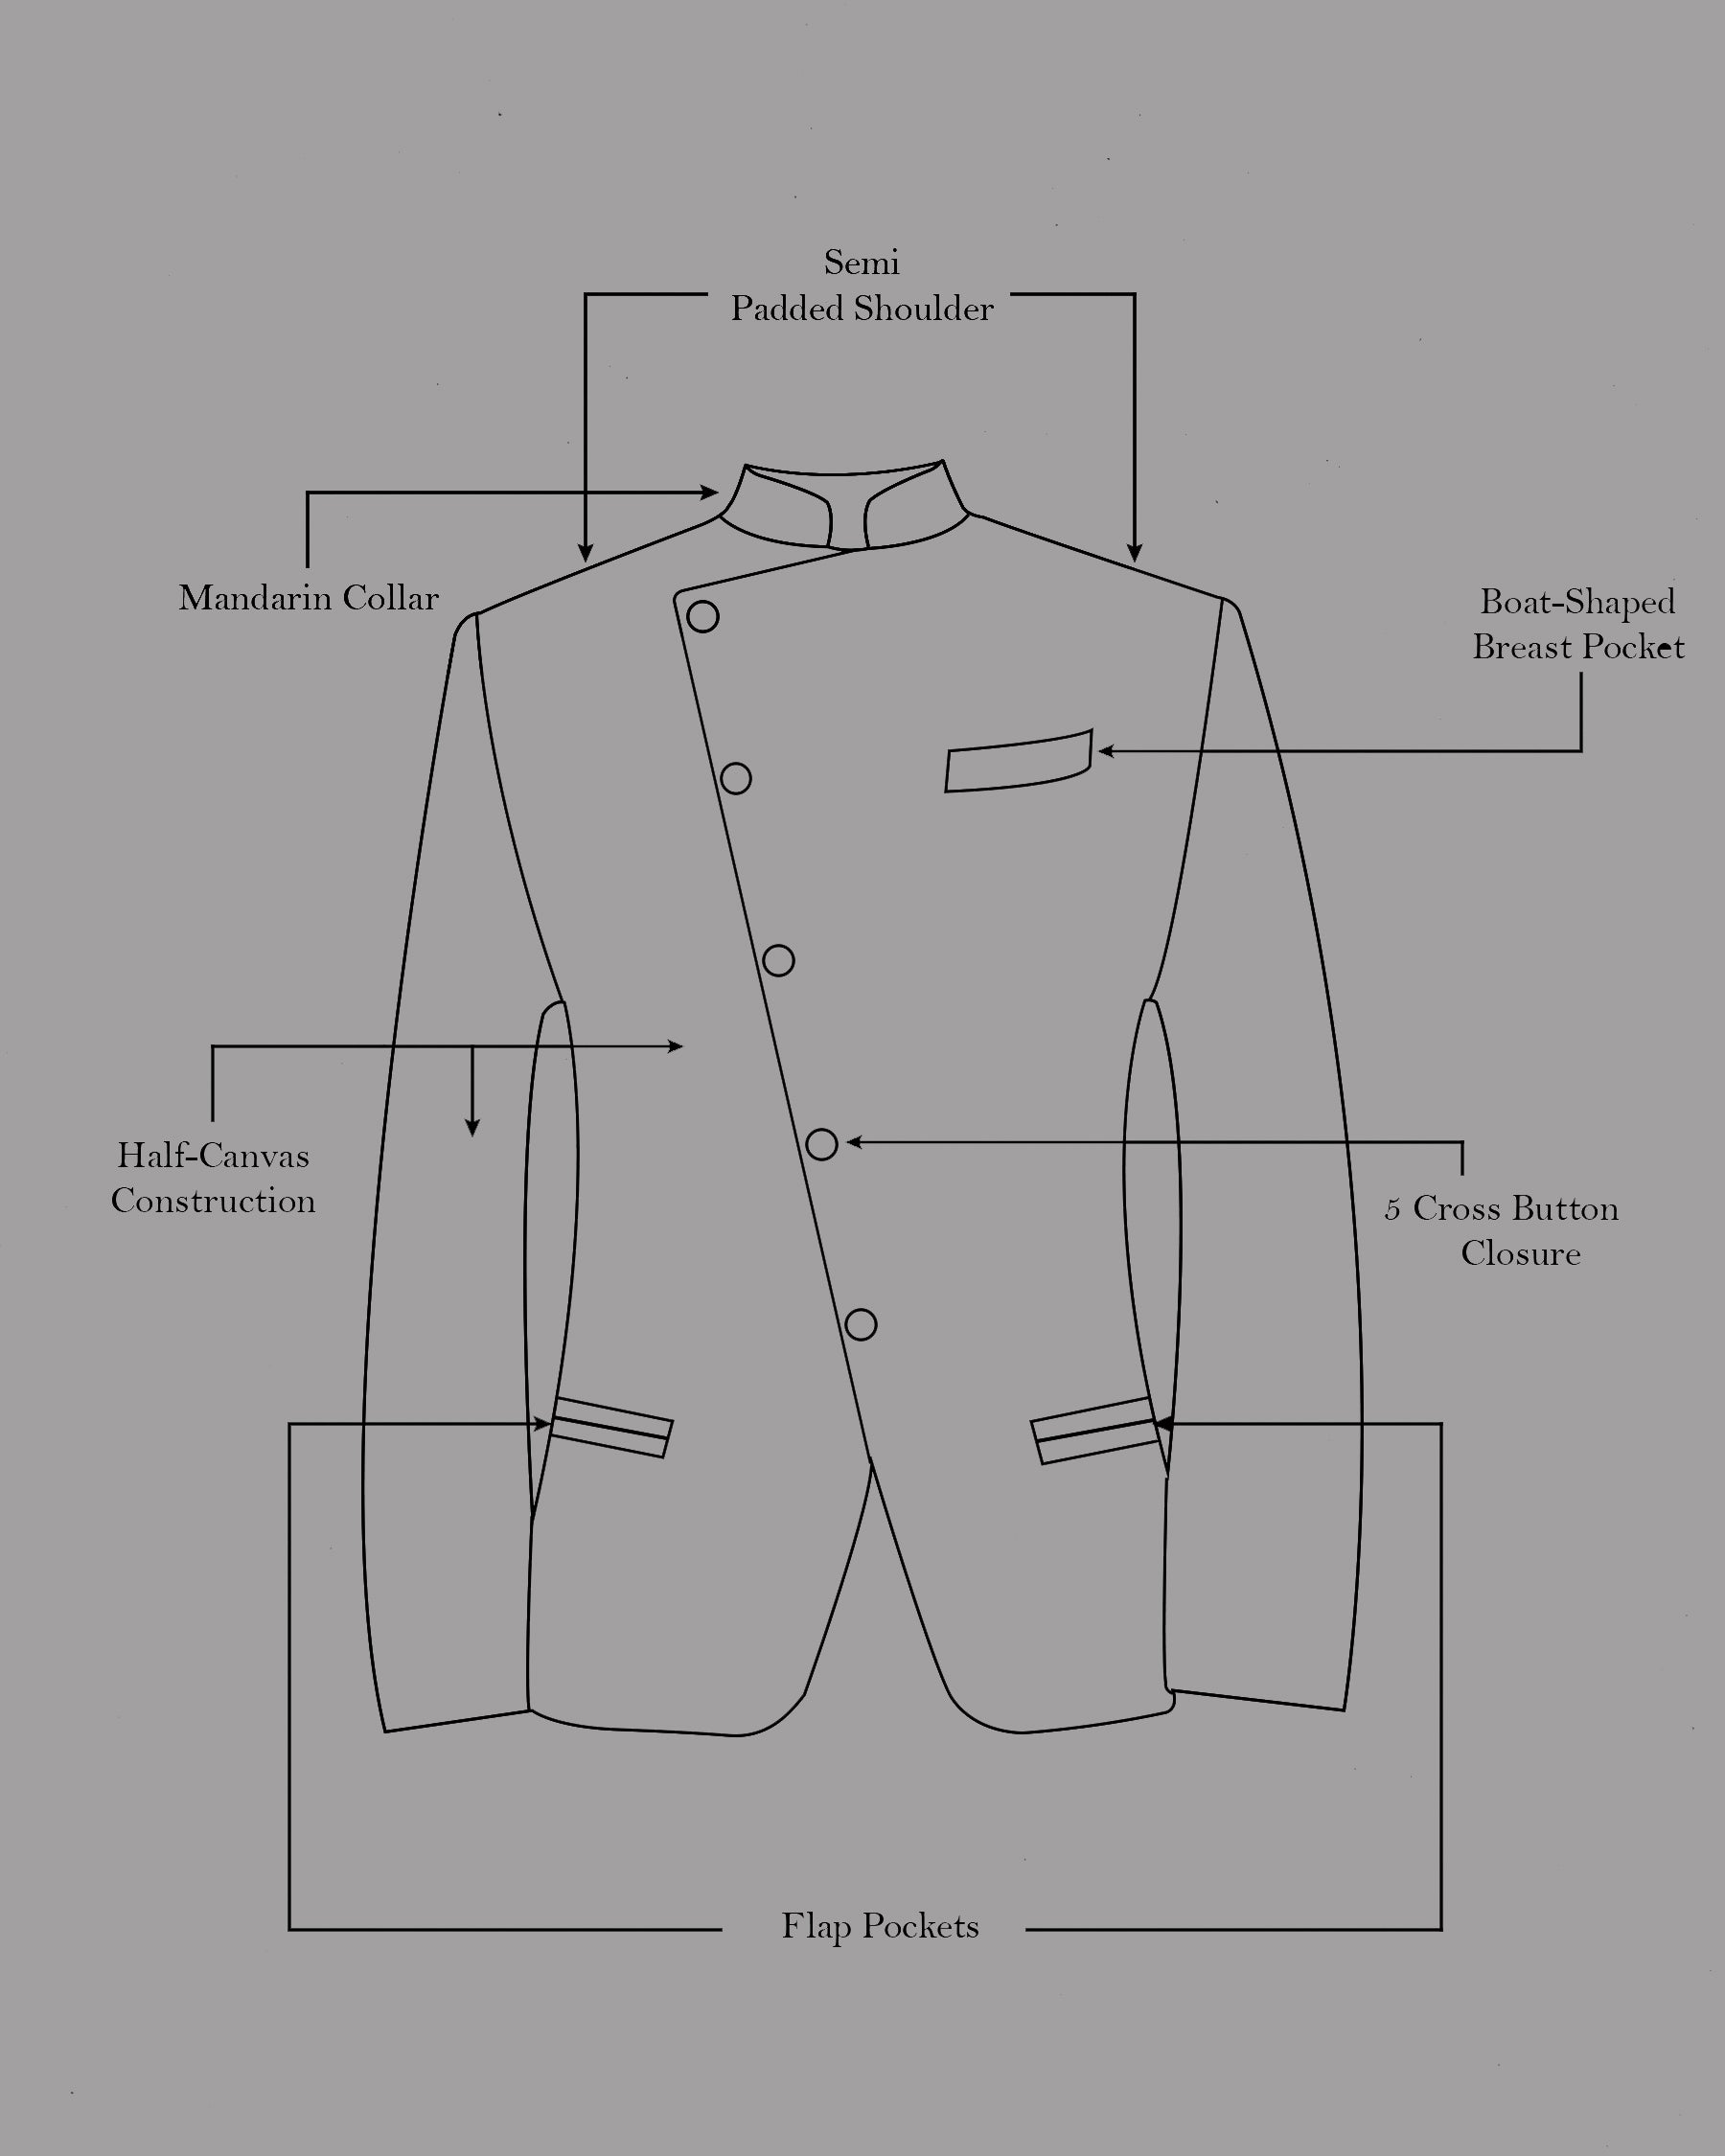 Gravel Gray Windowpane Cross Placket Bandhgala Suit